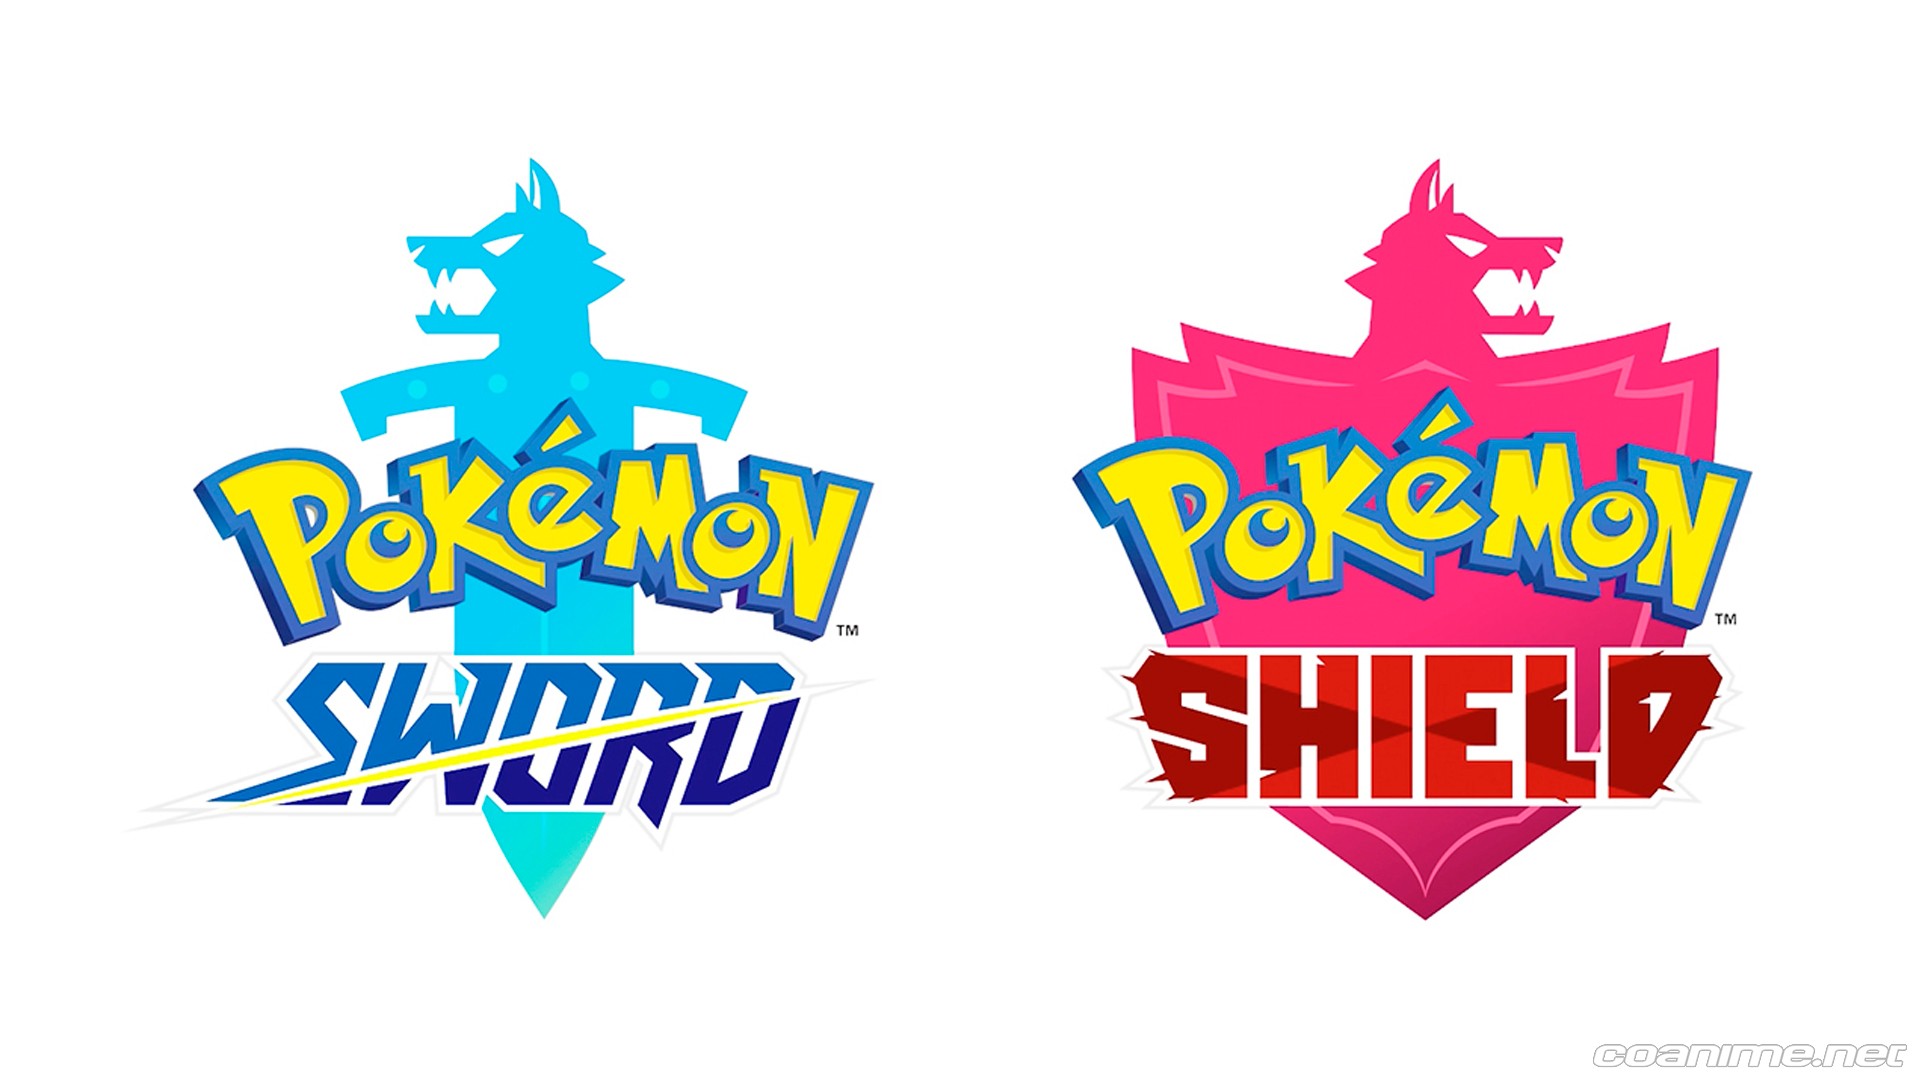 Pokémon Sword y Pokémon Shield lo nuevo de la franquicia